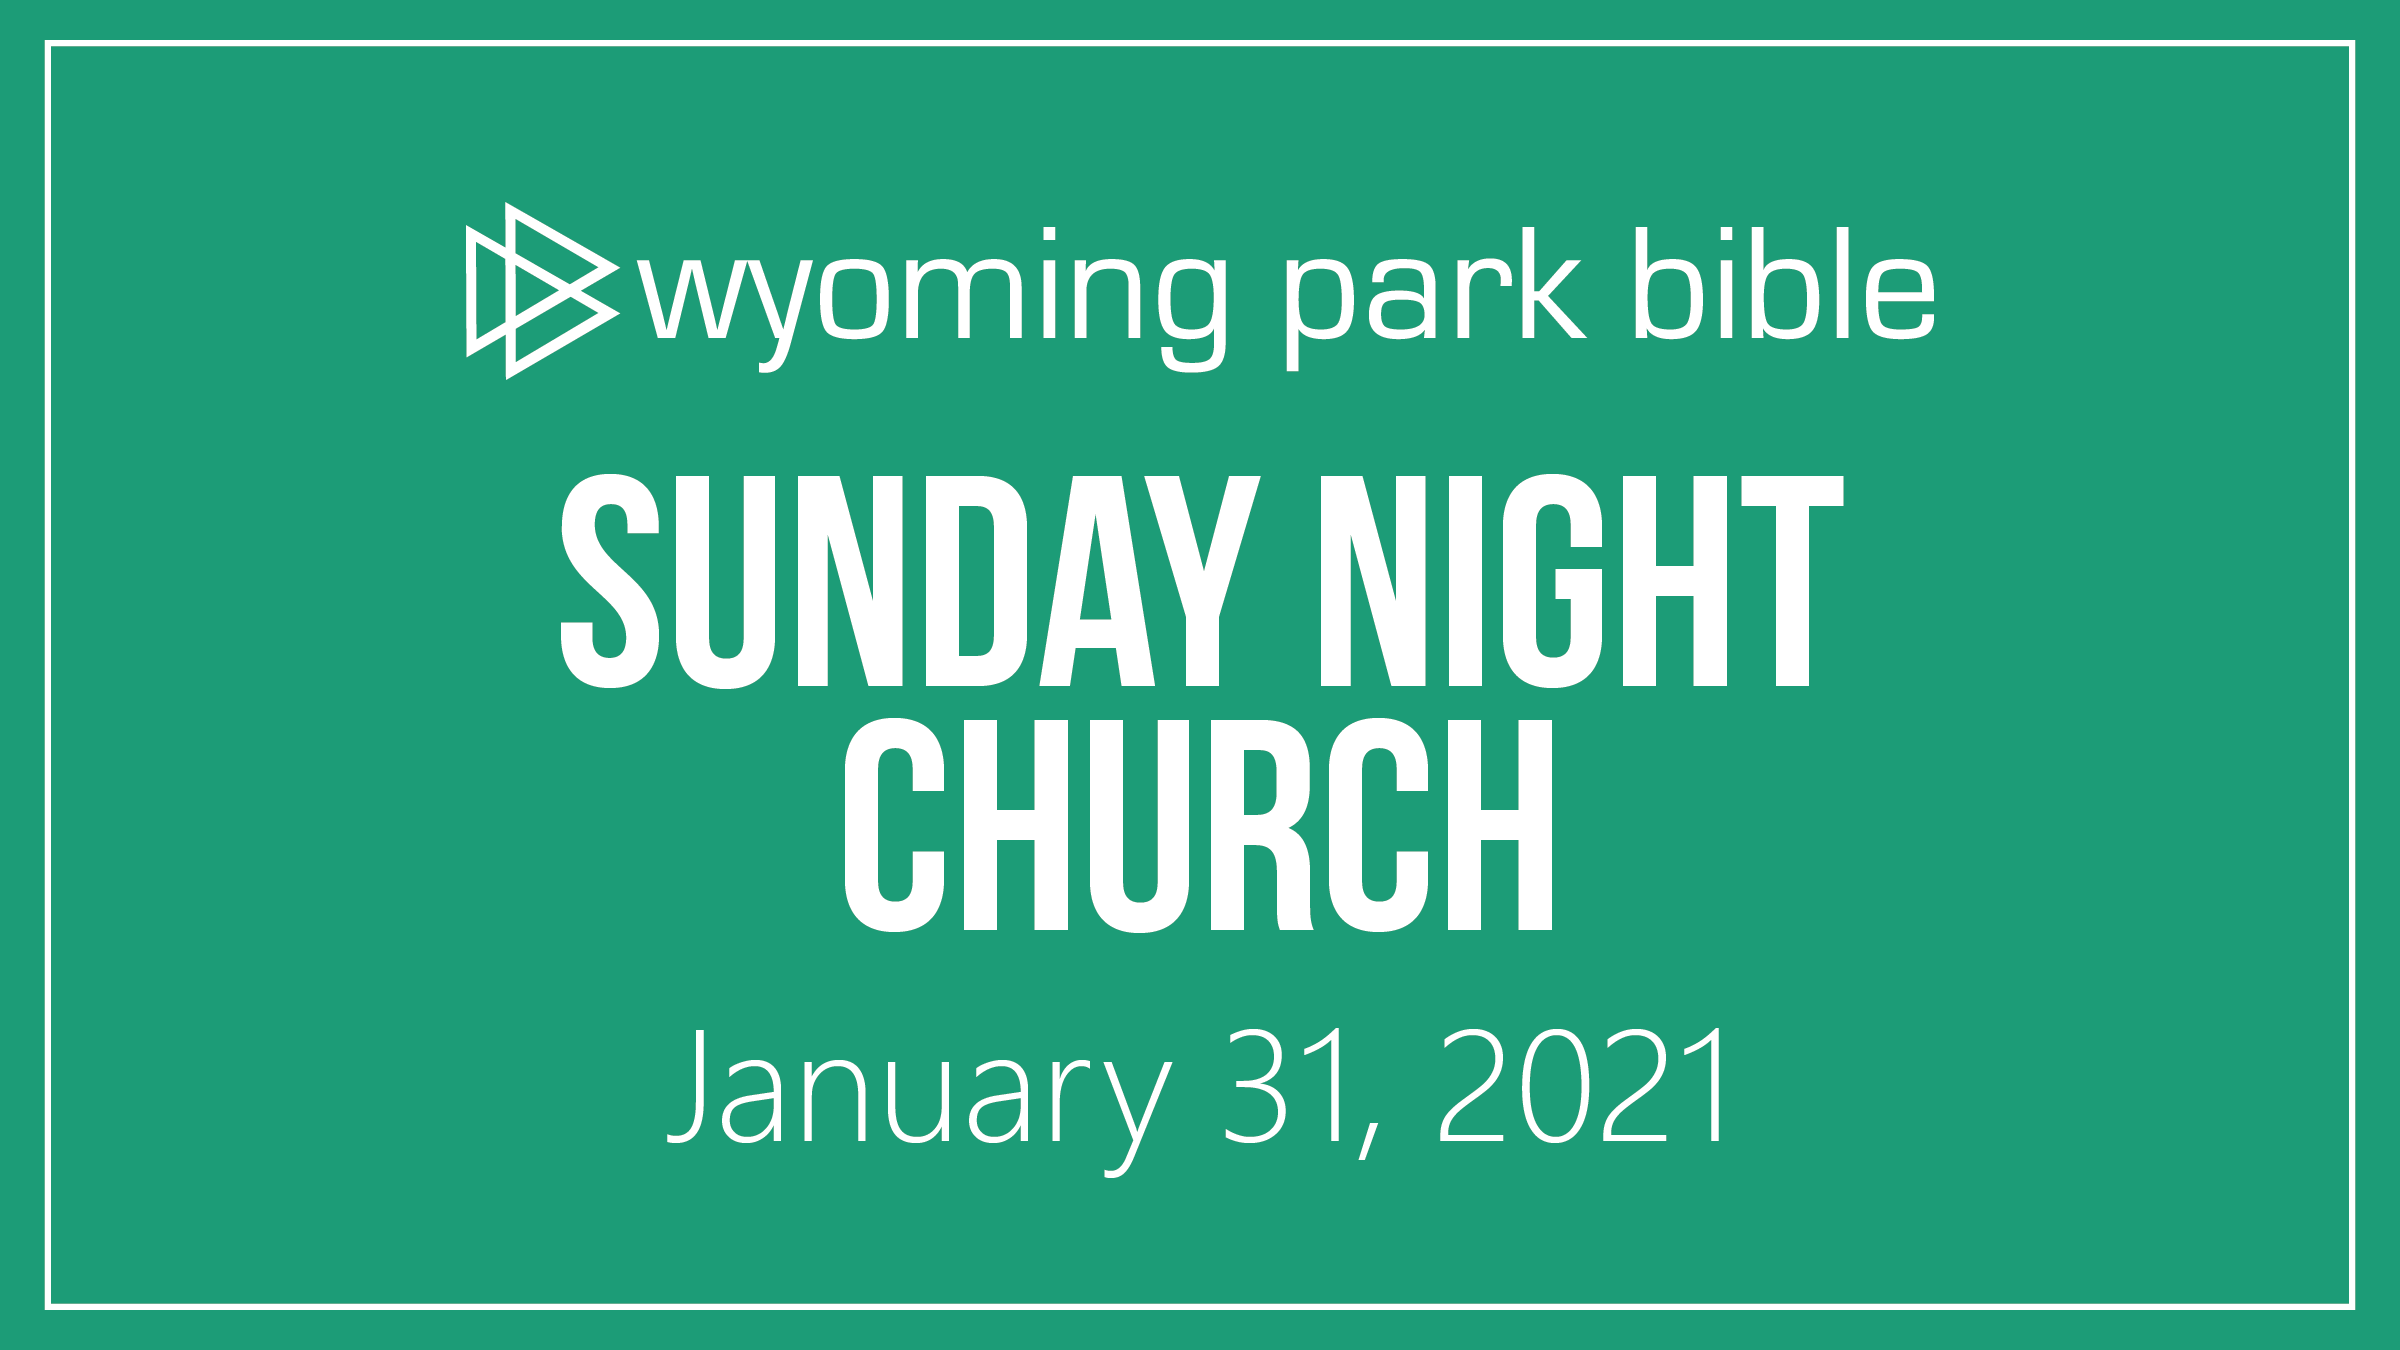 January 31, 2021 Sunday Night Church